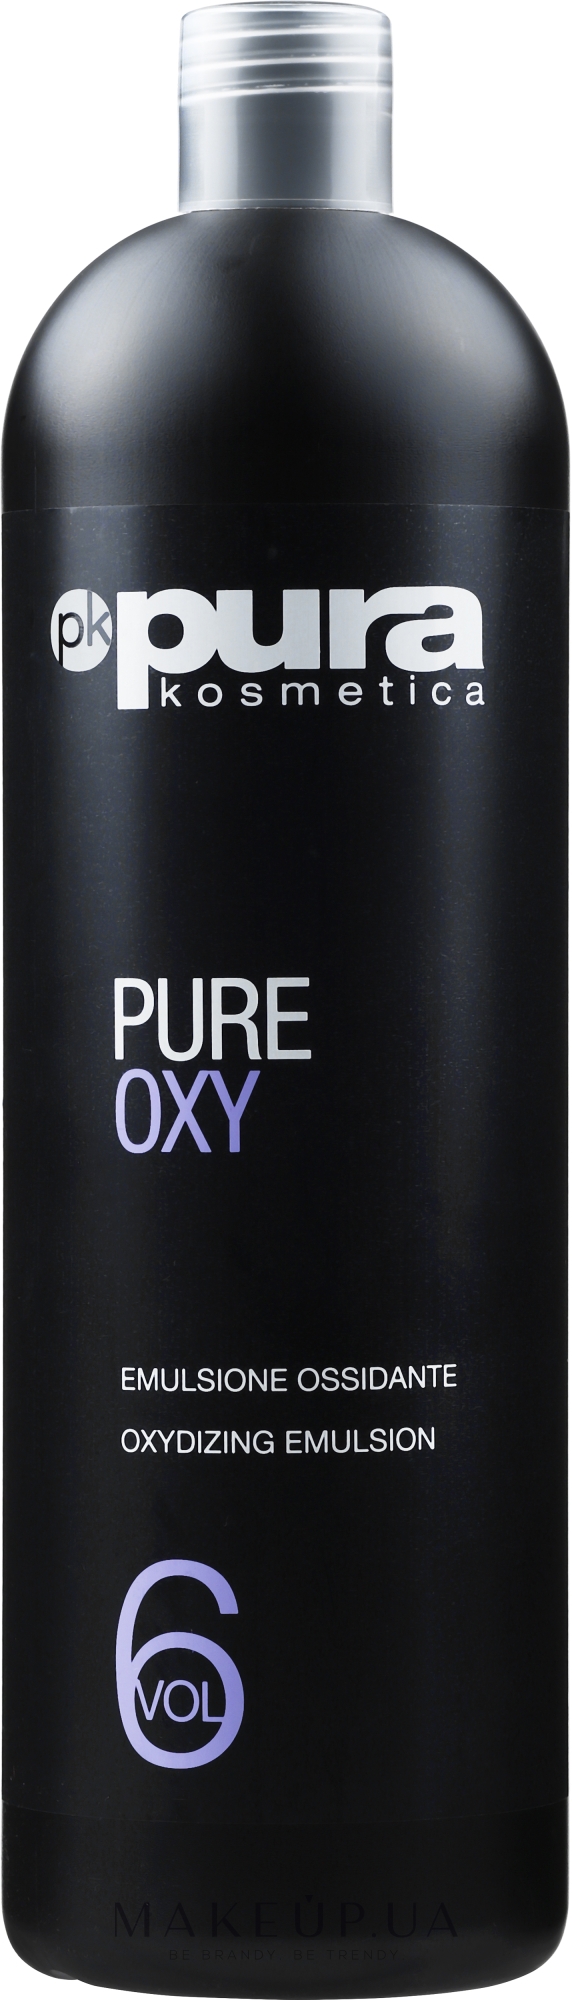 Окислитель для краски 1,8% - Pura Kosmetica Pure Oxy 6 Vol — фото 1000ml